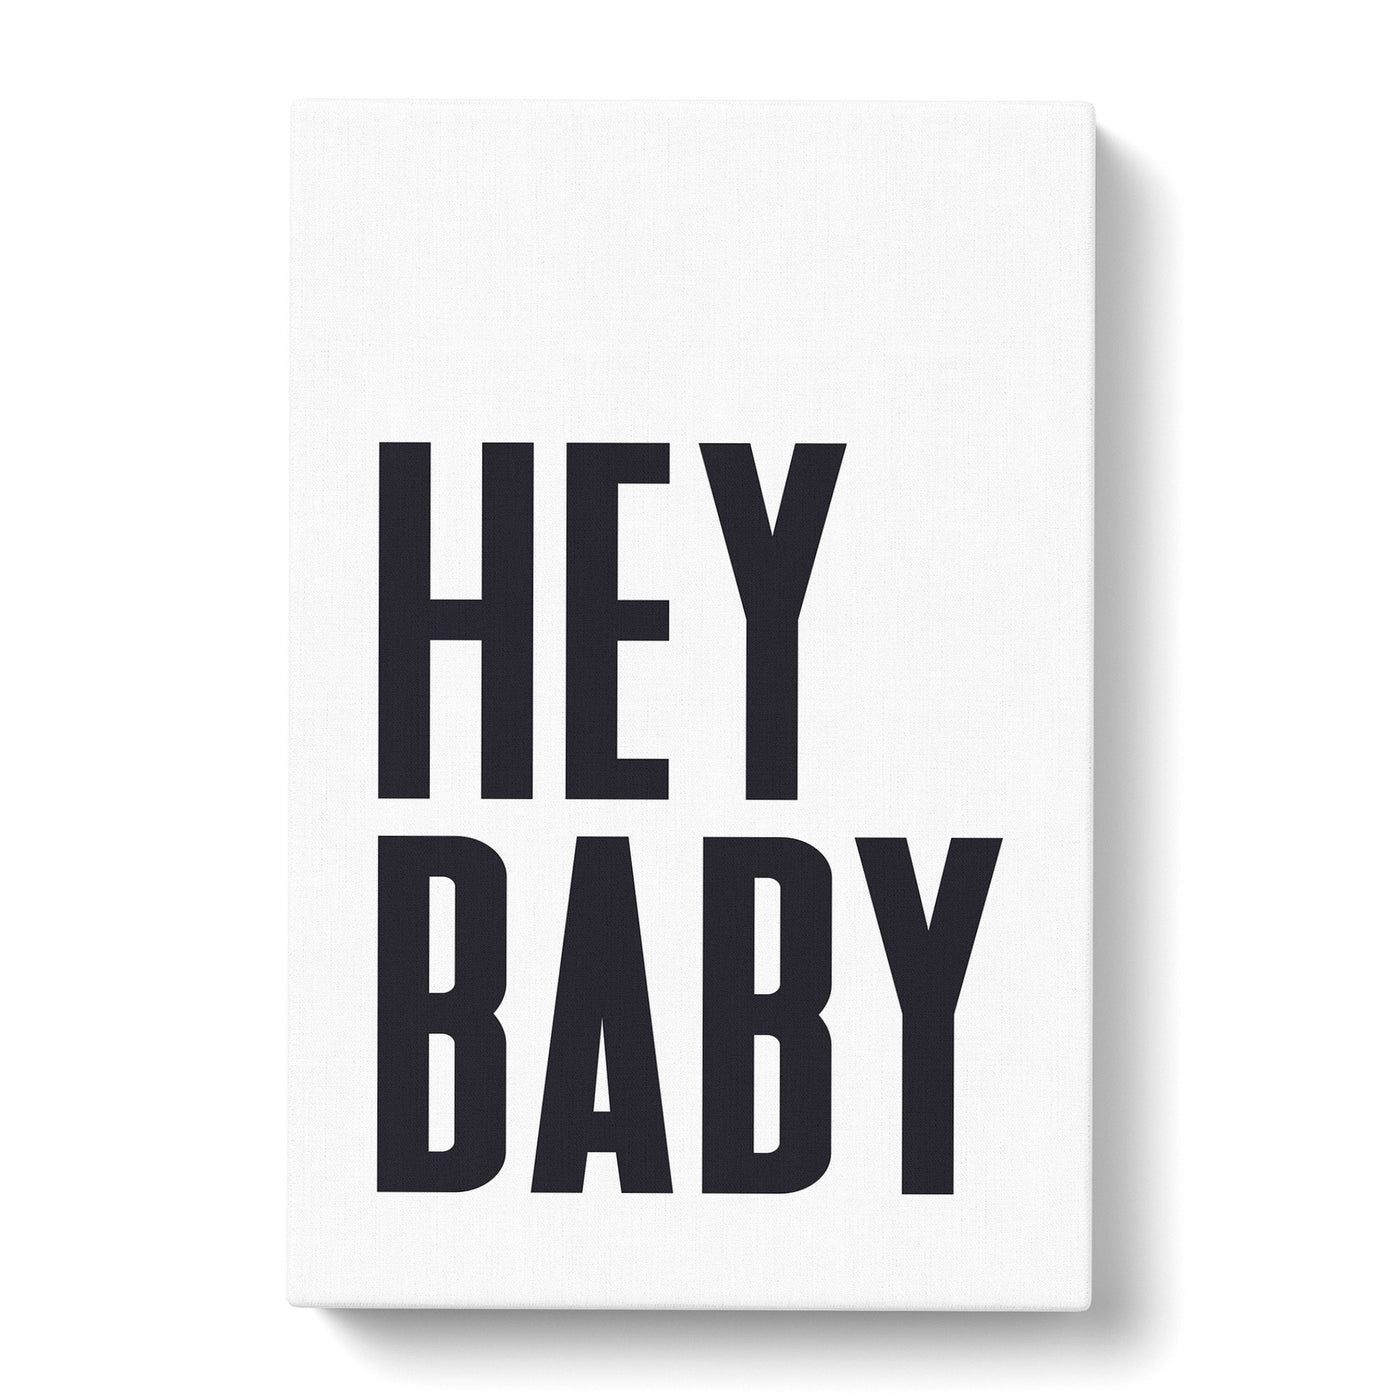 Hey Baby Typography Canvas Print Main Image